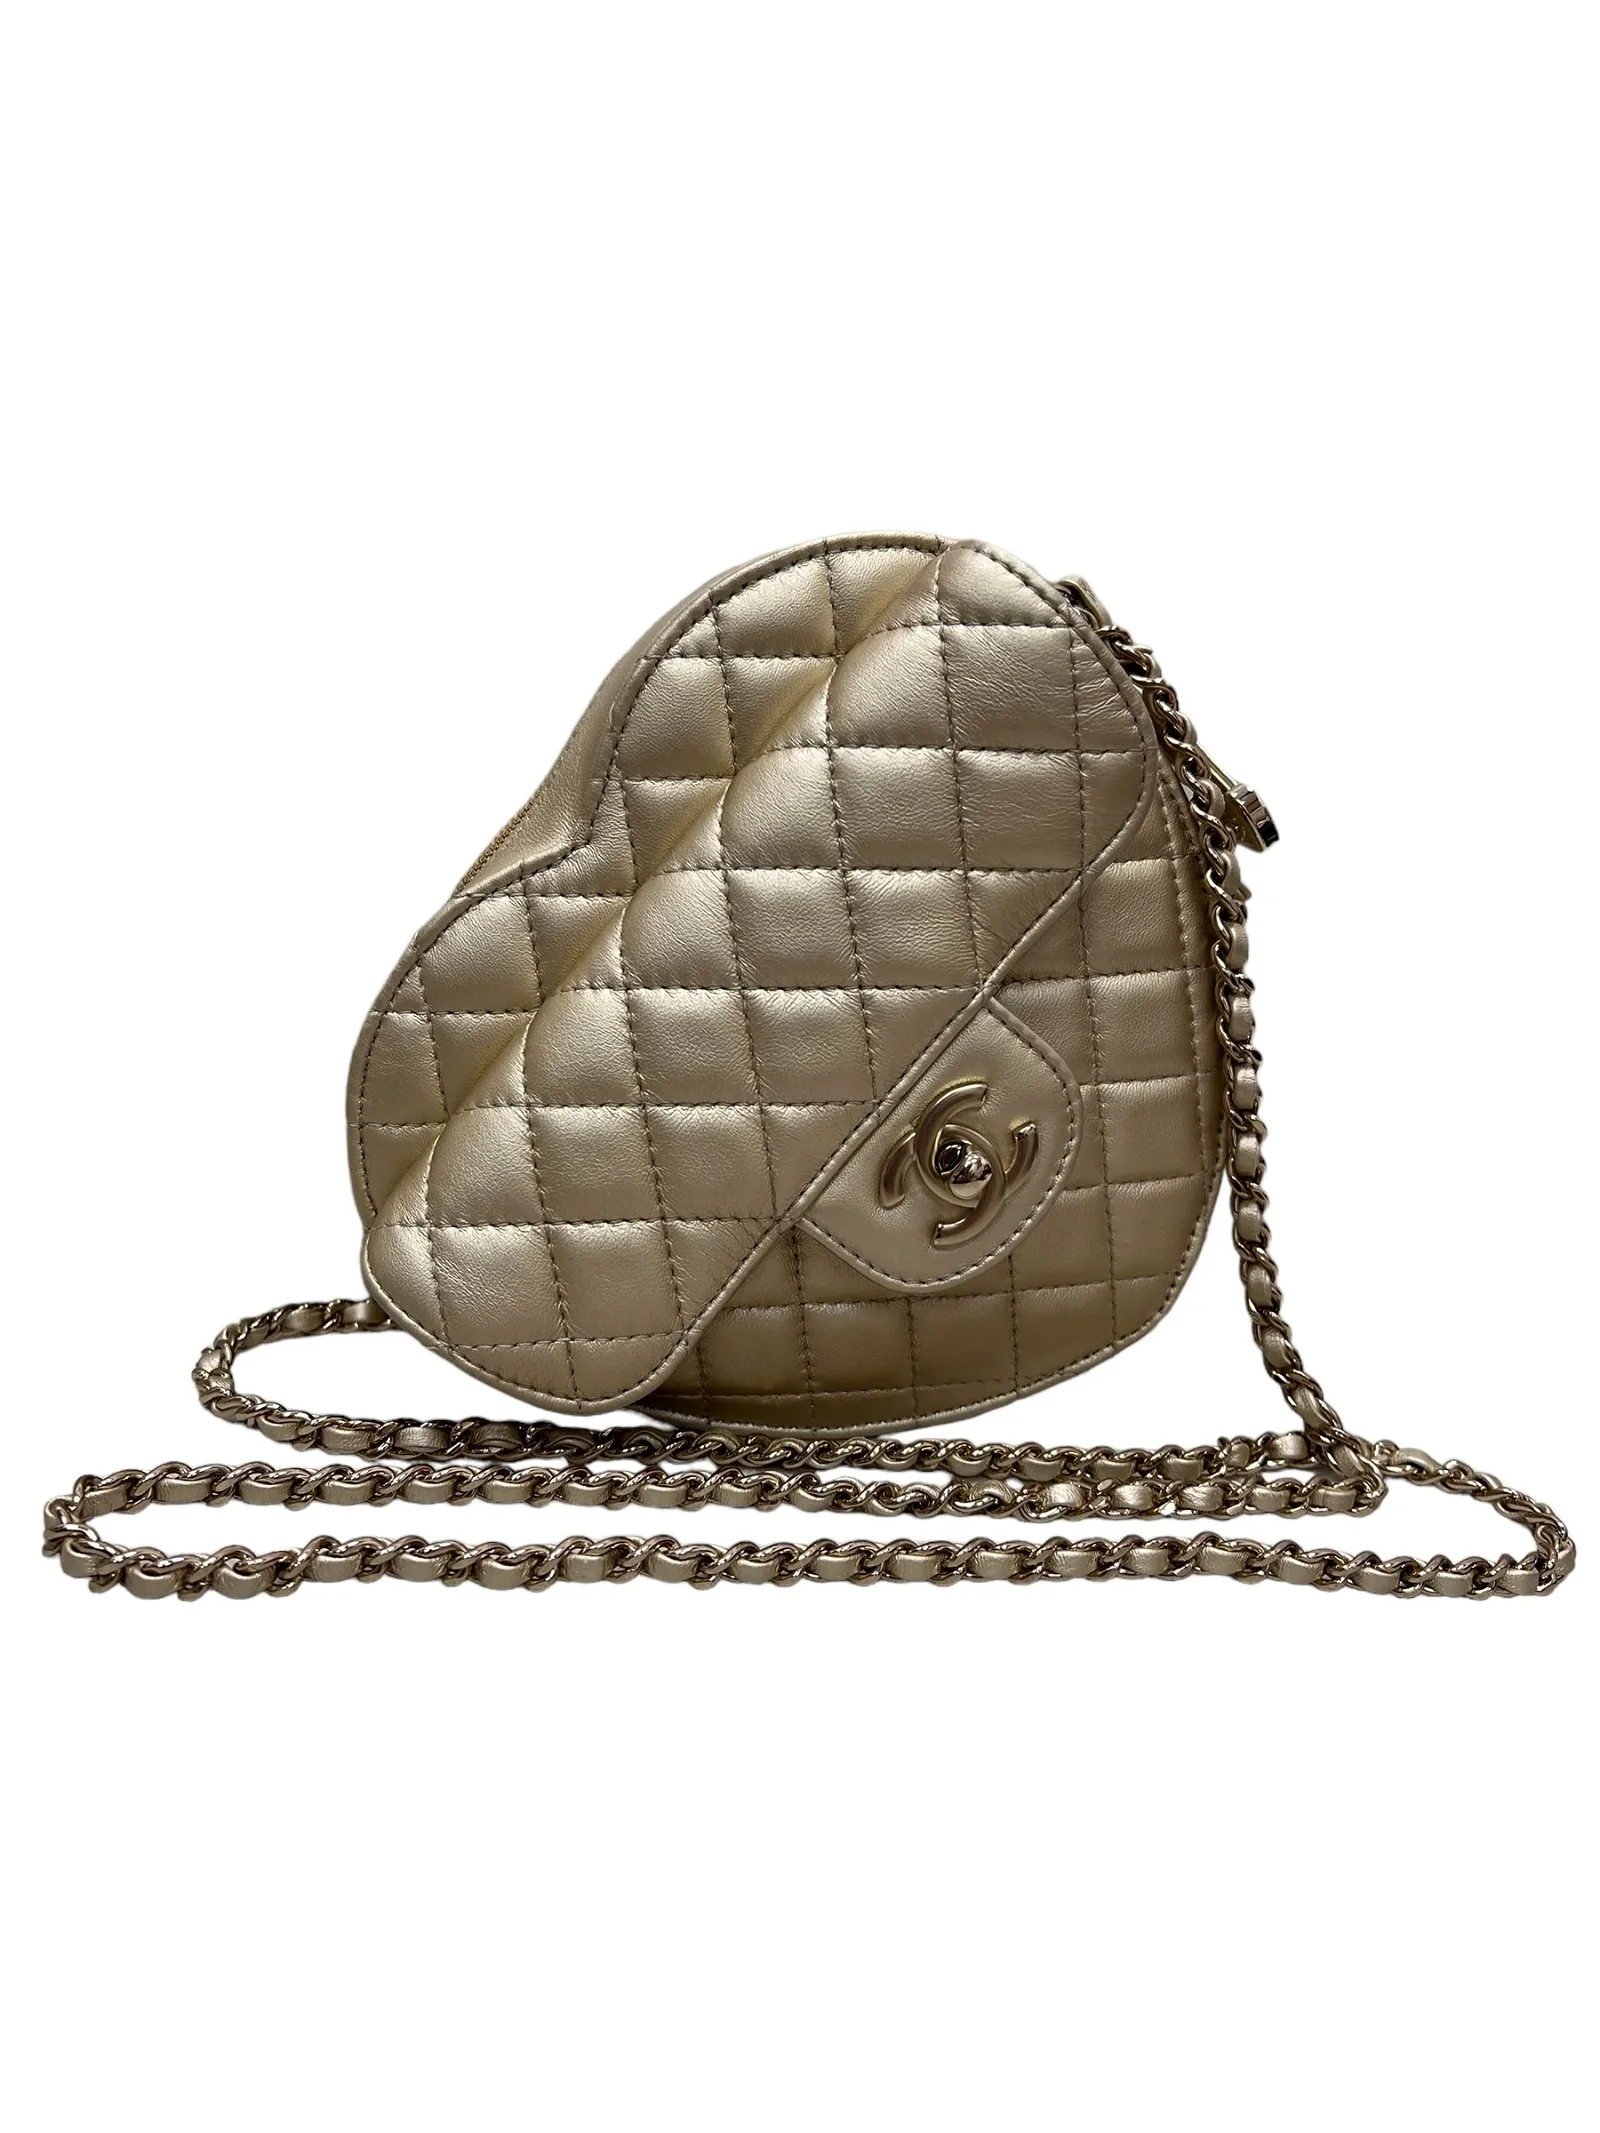 Image of Chanel Heart Large Bag Gold Lambskin GHW SKC1724